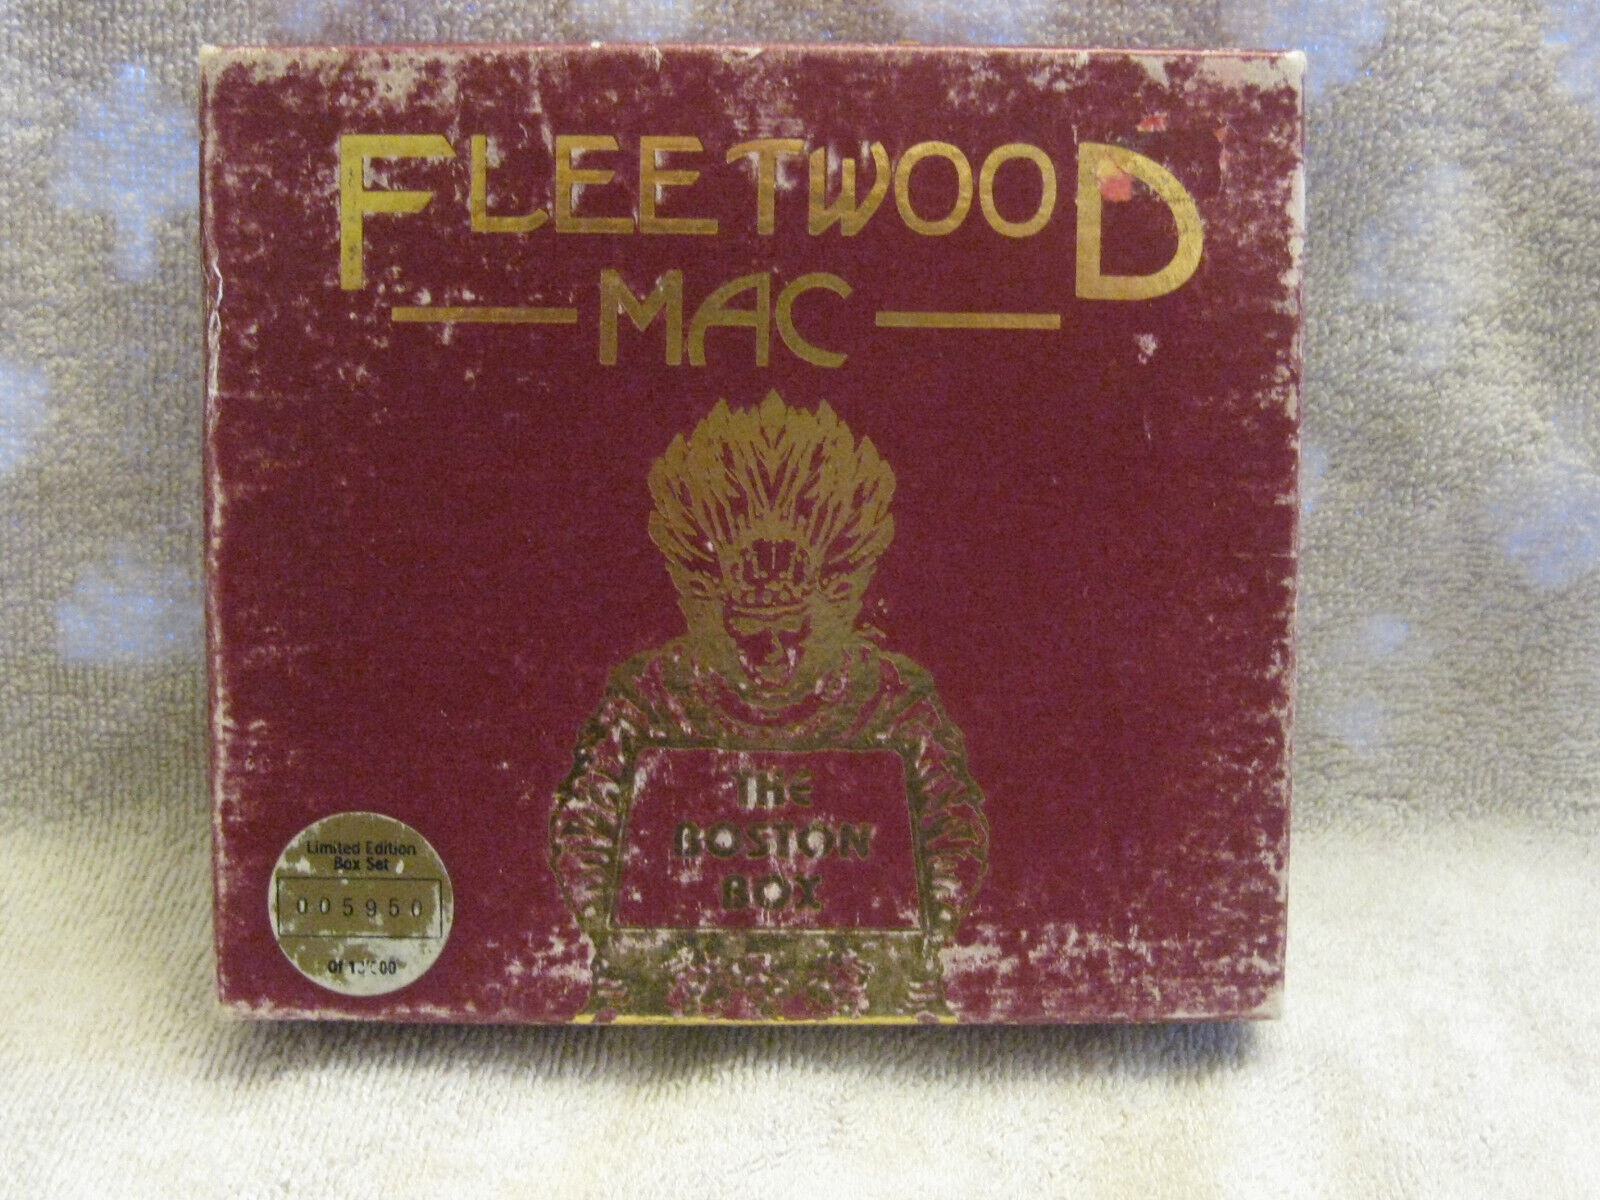 Fleetwood Mac ‎– The Boston Box (1999) Original Masters 3 CD Box set wear on box